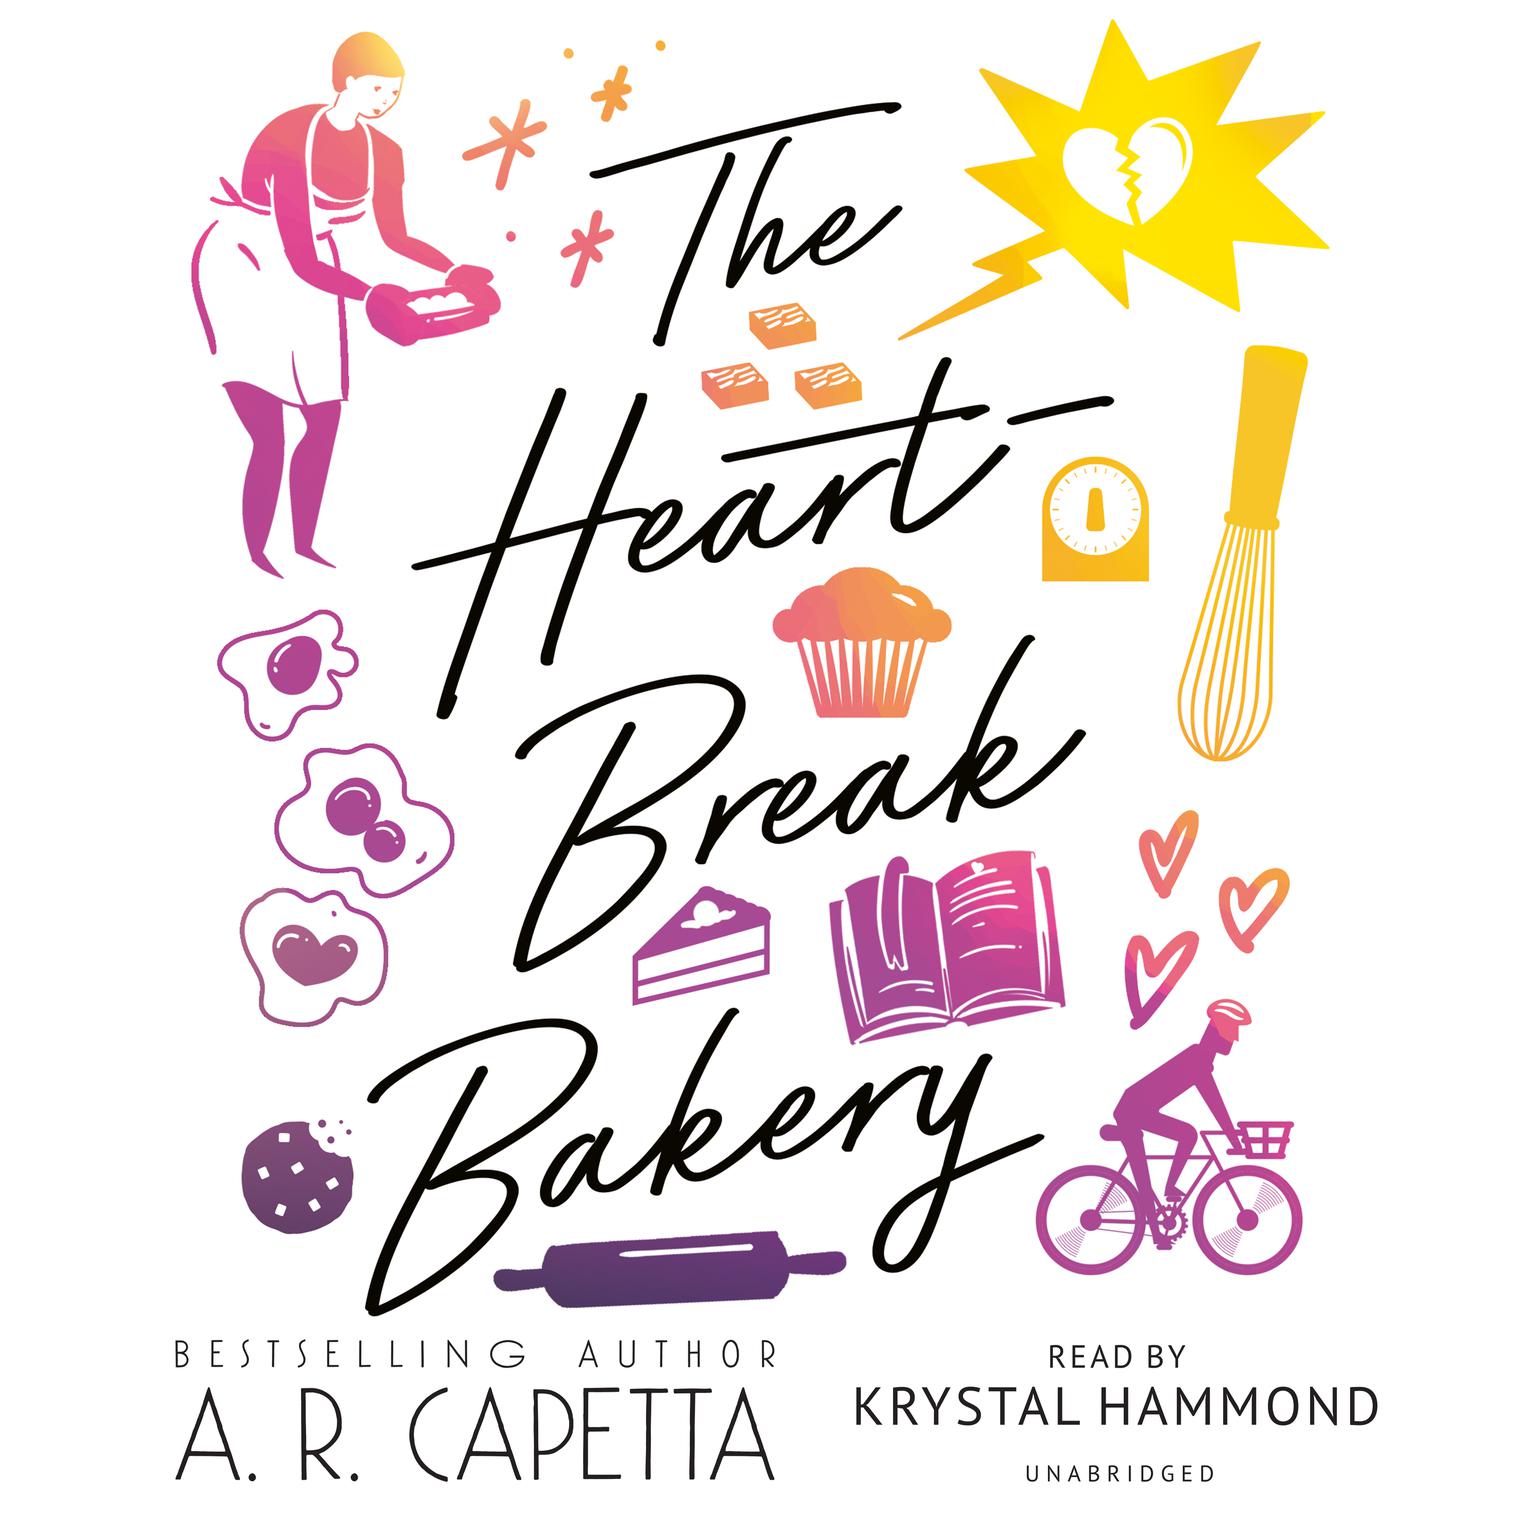 A.R. Capetta, Krystal Hammond: The Heartbreak Bakery (AudiobookFormat, 2021, Candlewick)